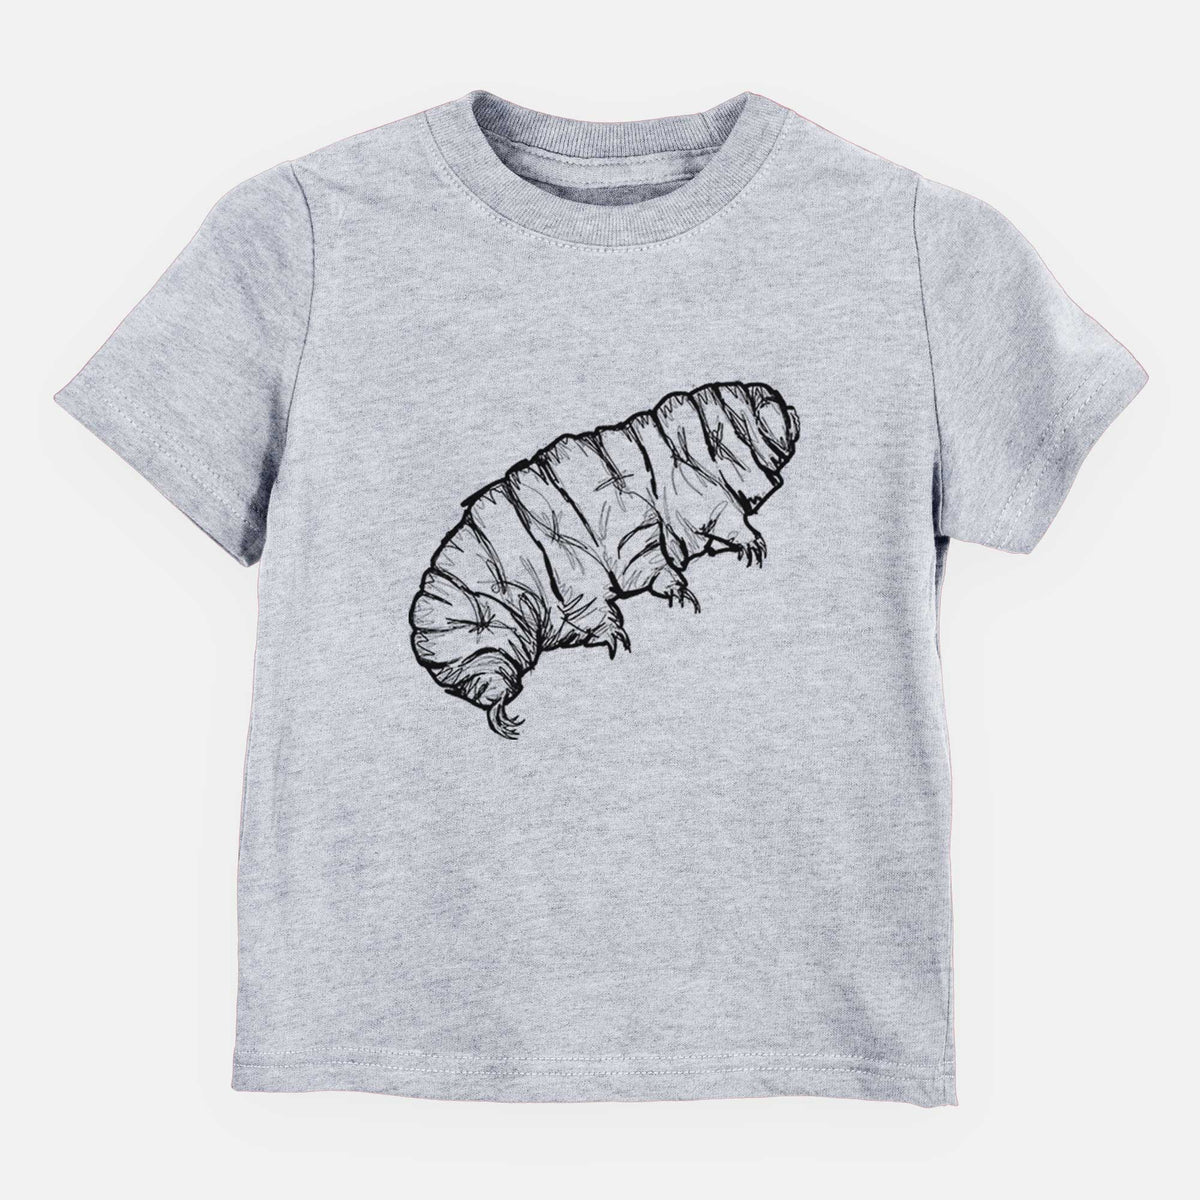 Tardigrade - Tardigrada - Kids Shirt